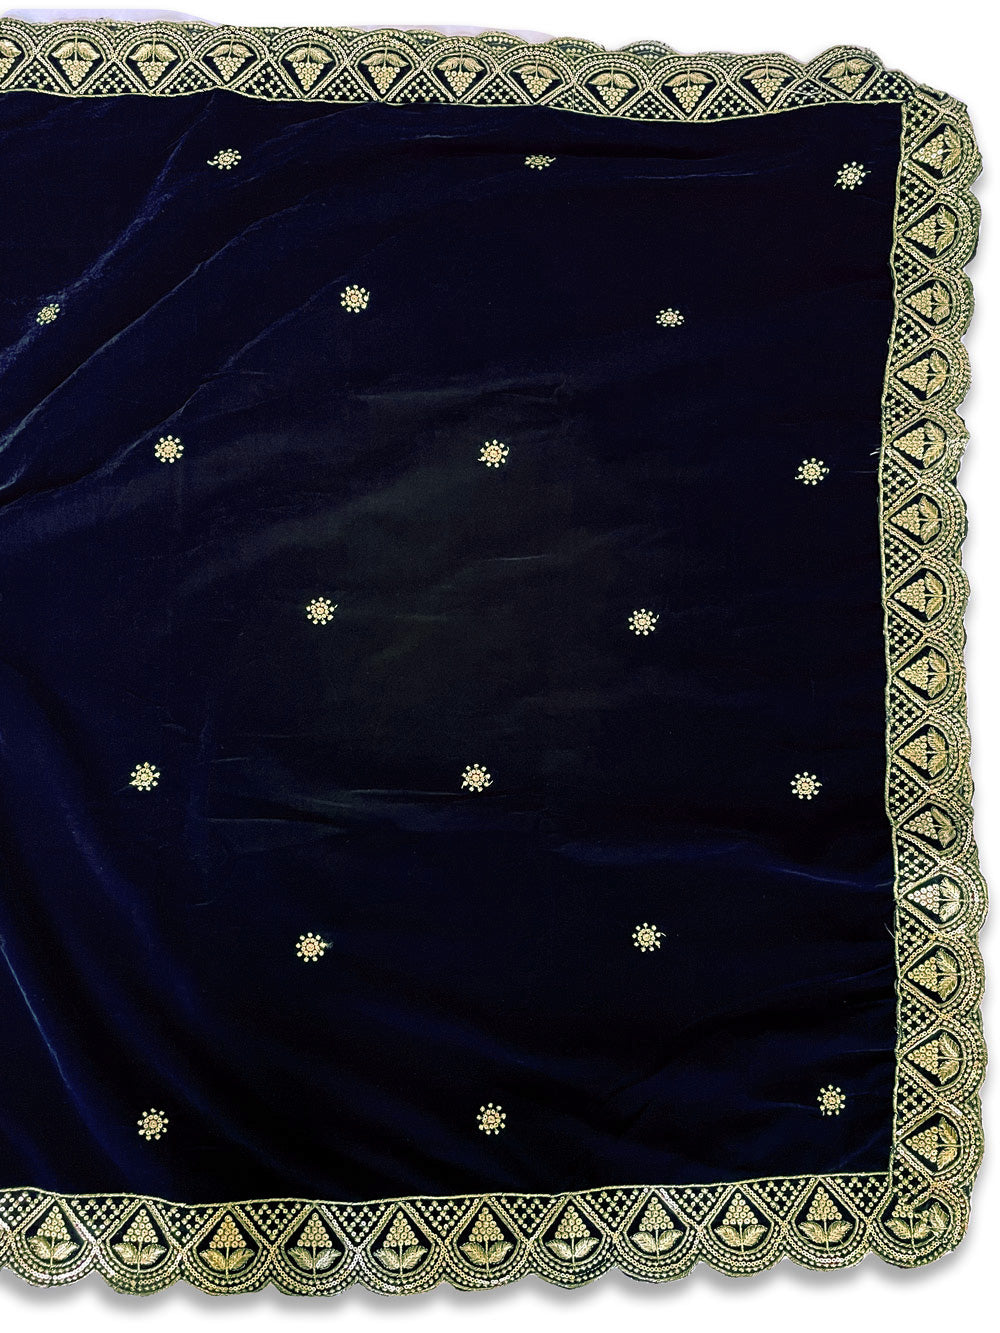 Dark Navy Blue Embroidered Velvet Shawl